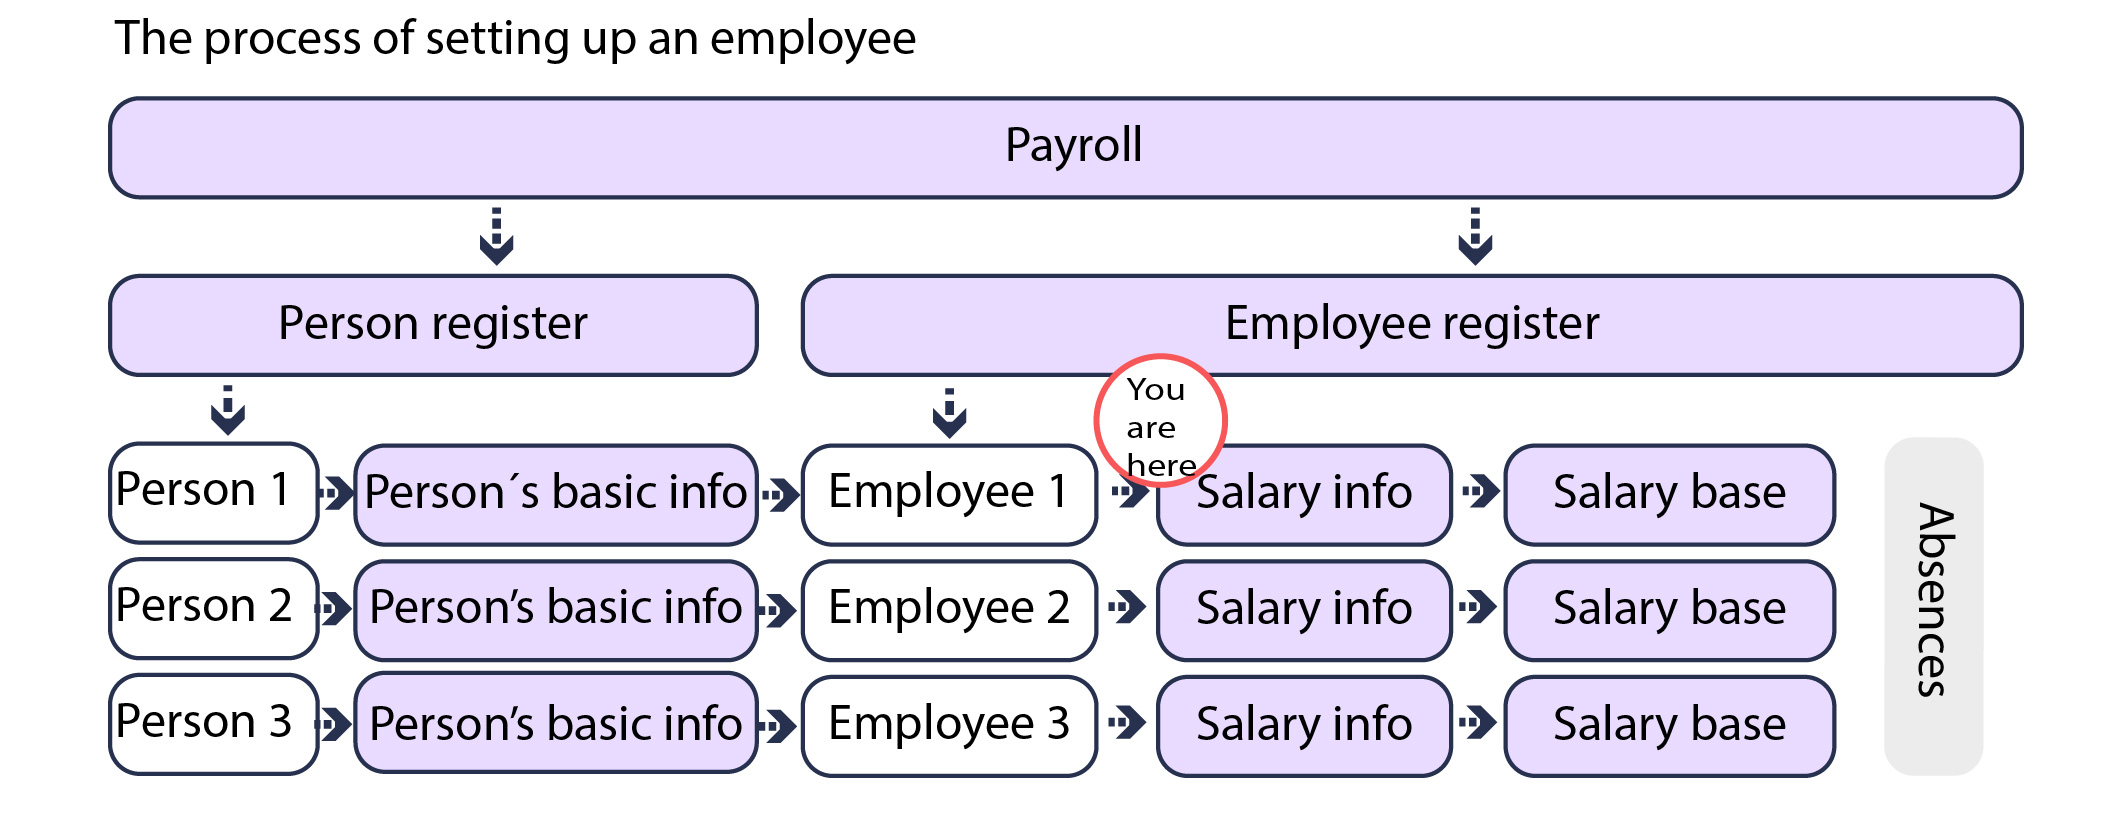 palkansaajan_tiedot__the_process_of_setting_up_an_employee_en.jpg